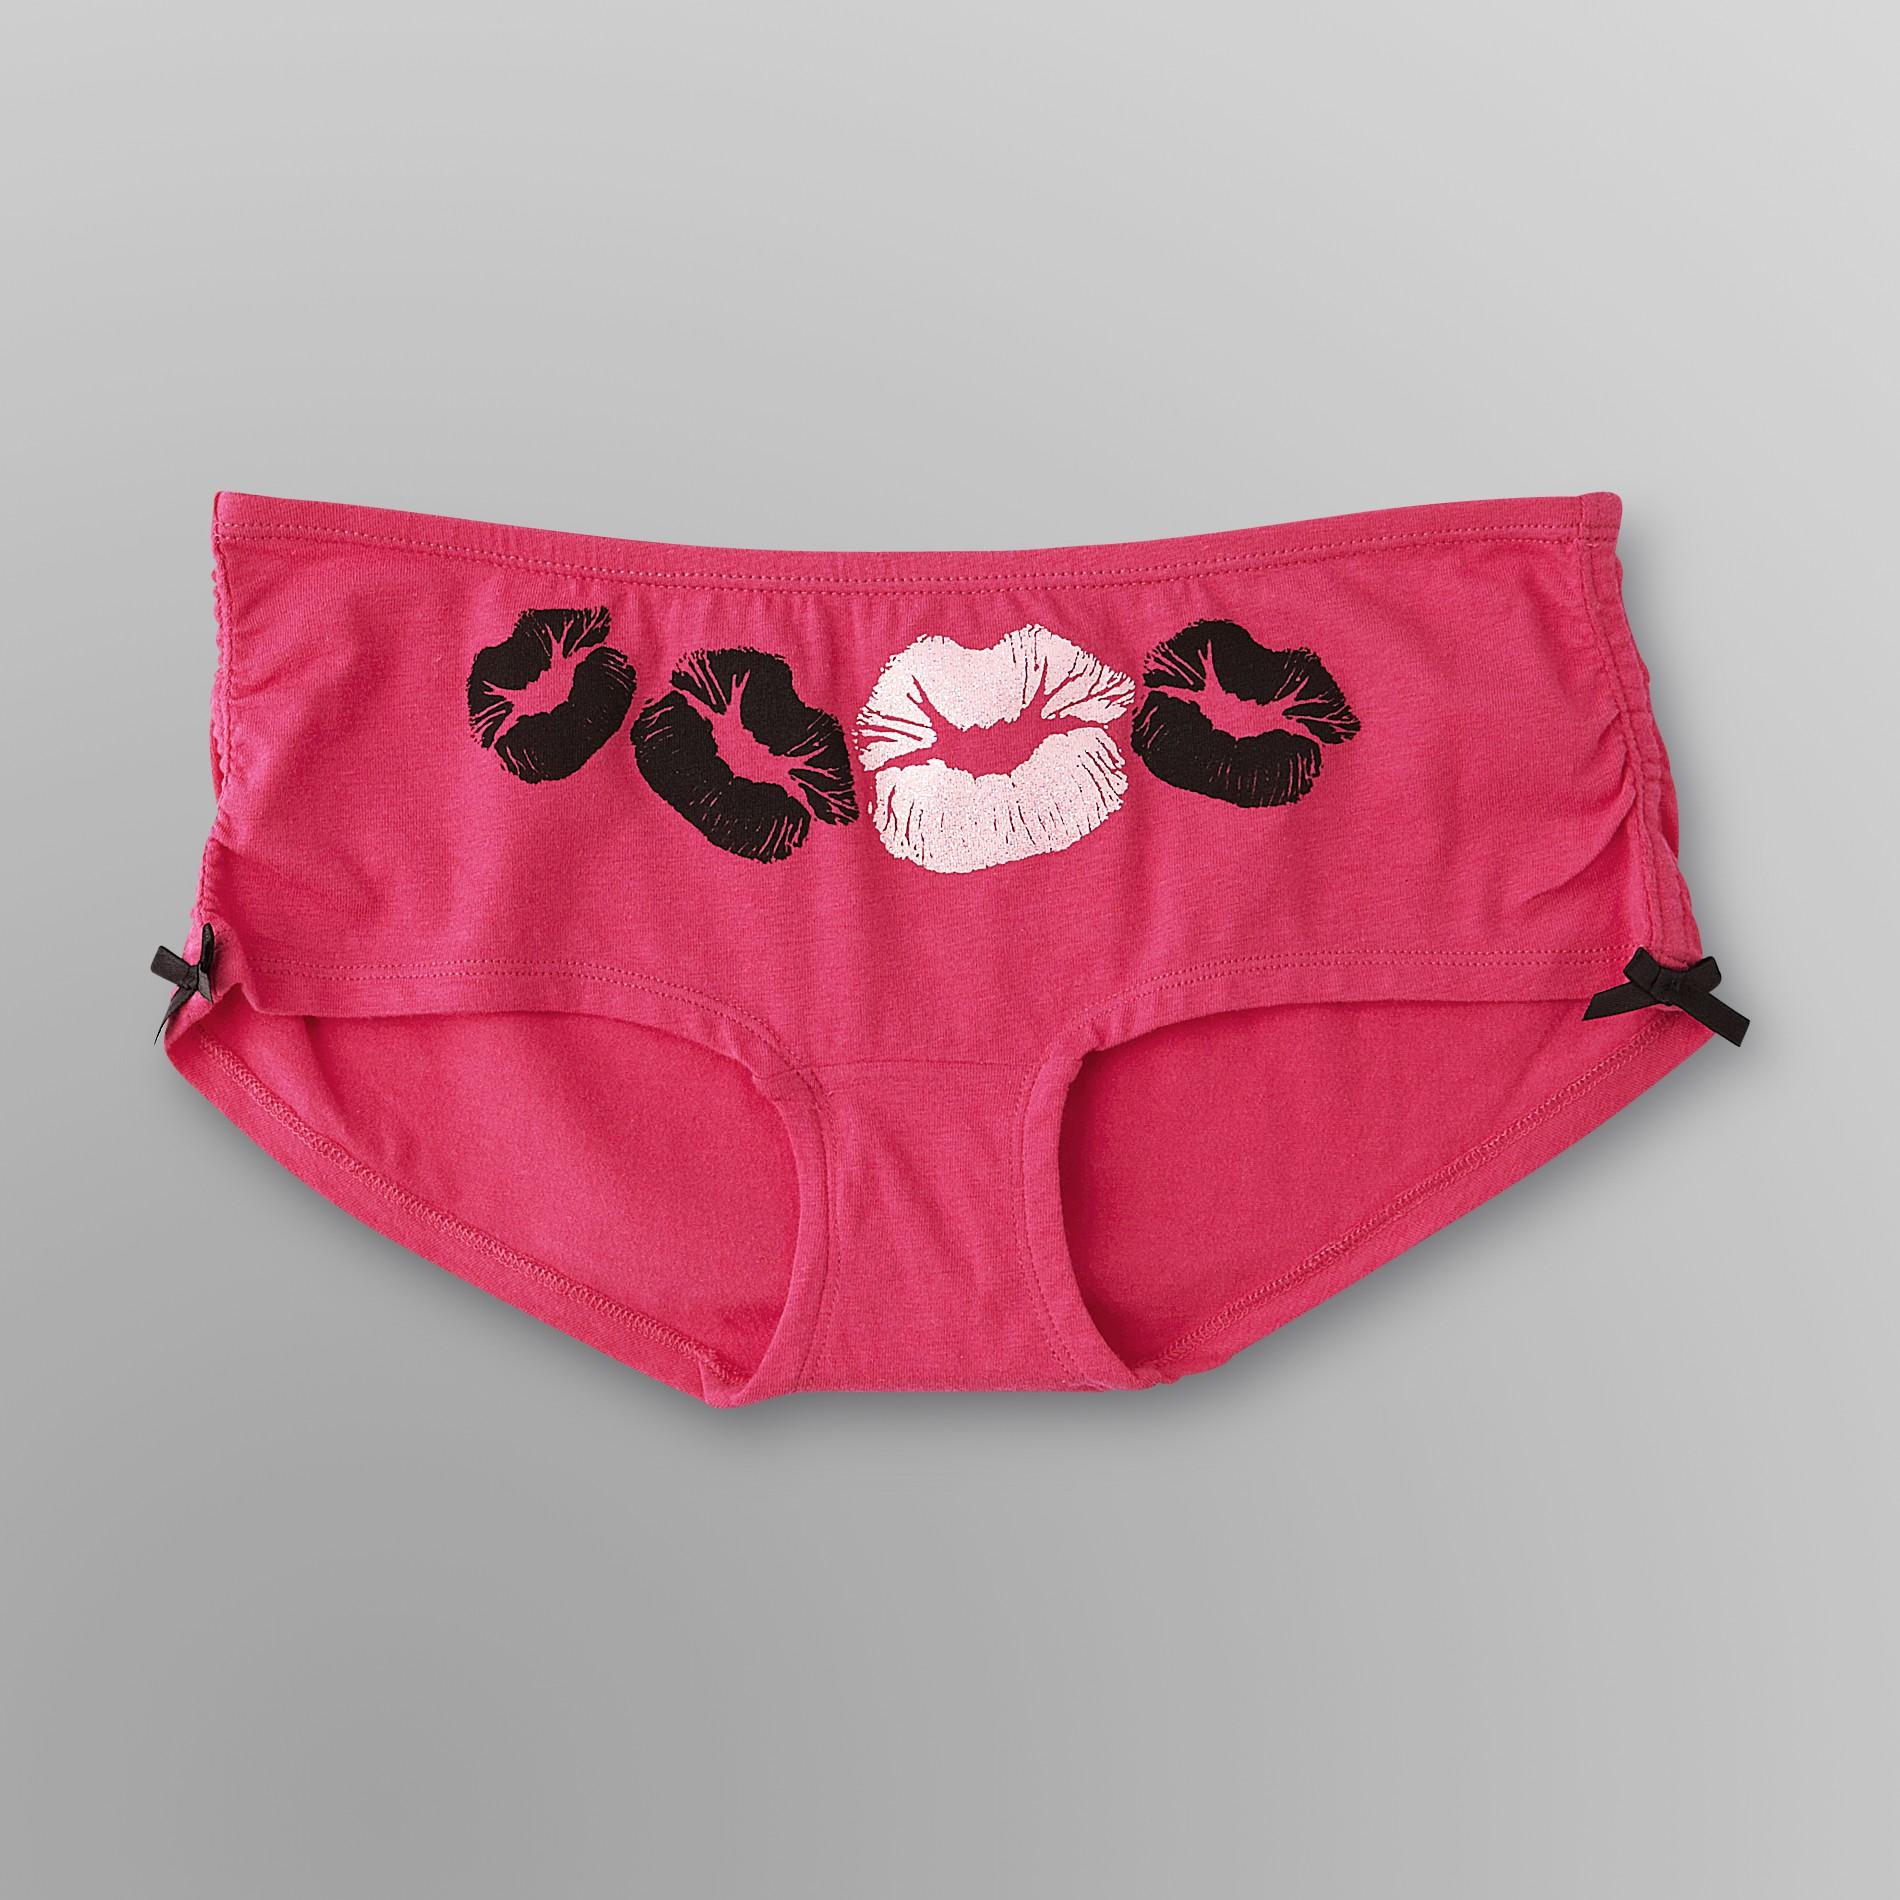 Joe Boxer Women's Hipster Panties - Kiss This